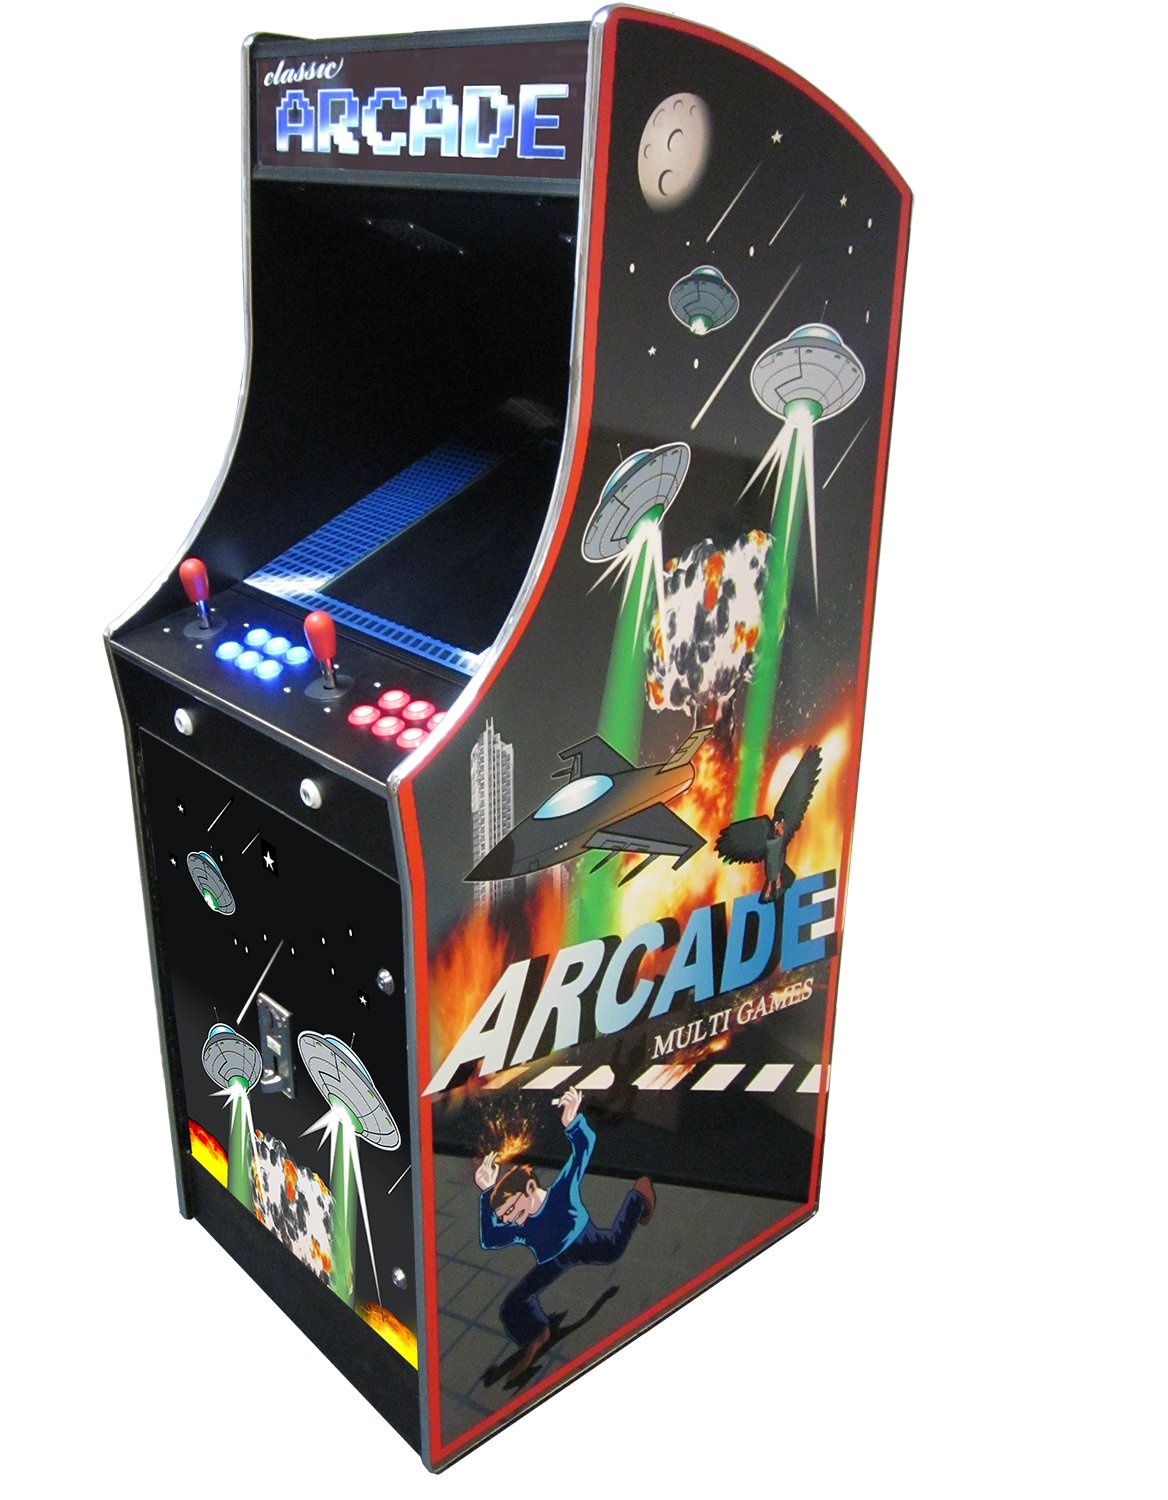 x arcade with bluestacks